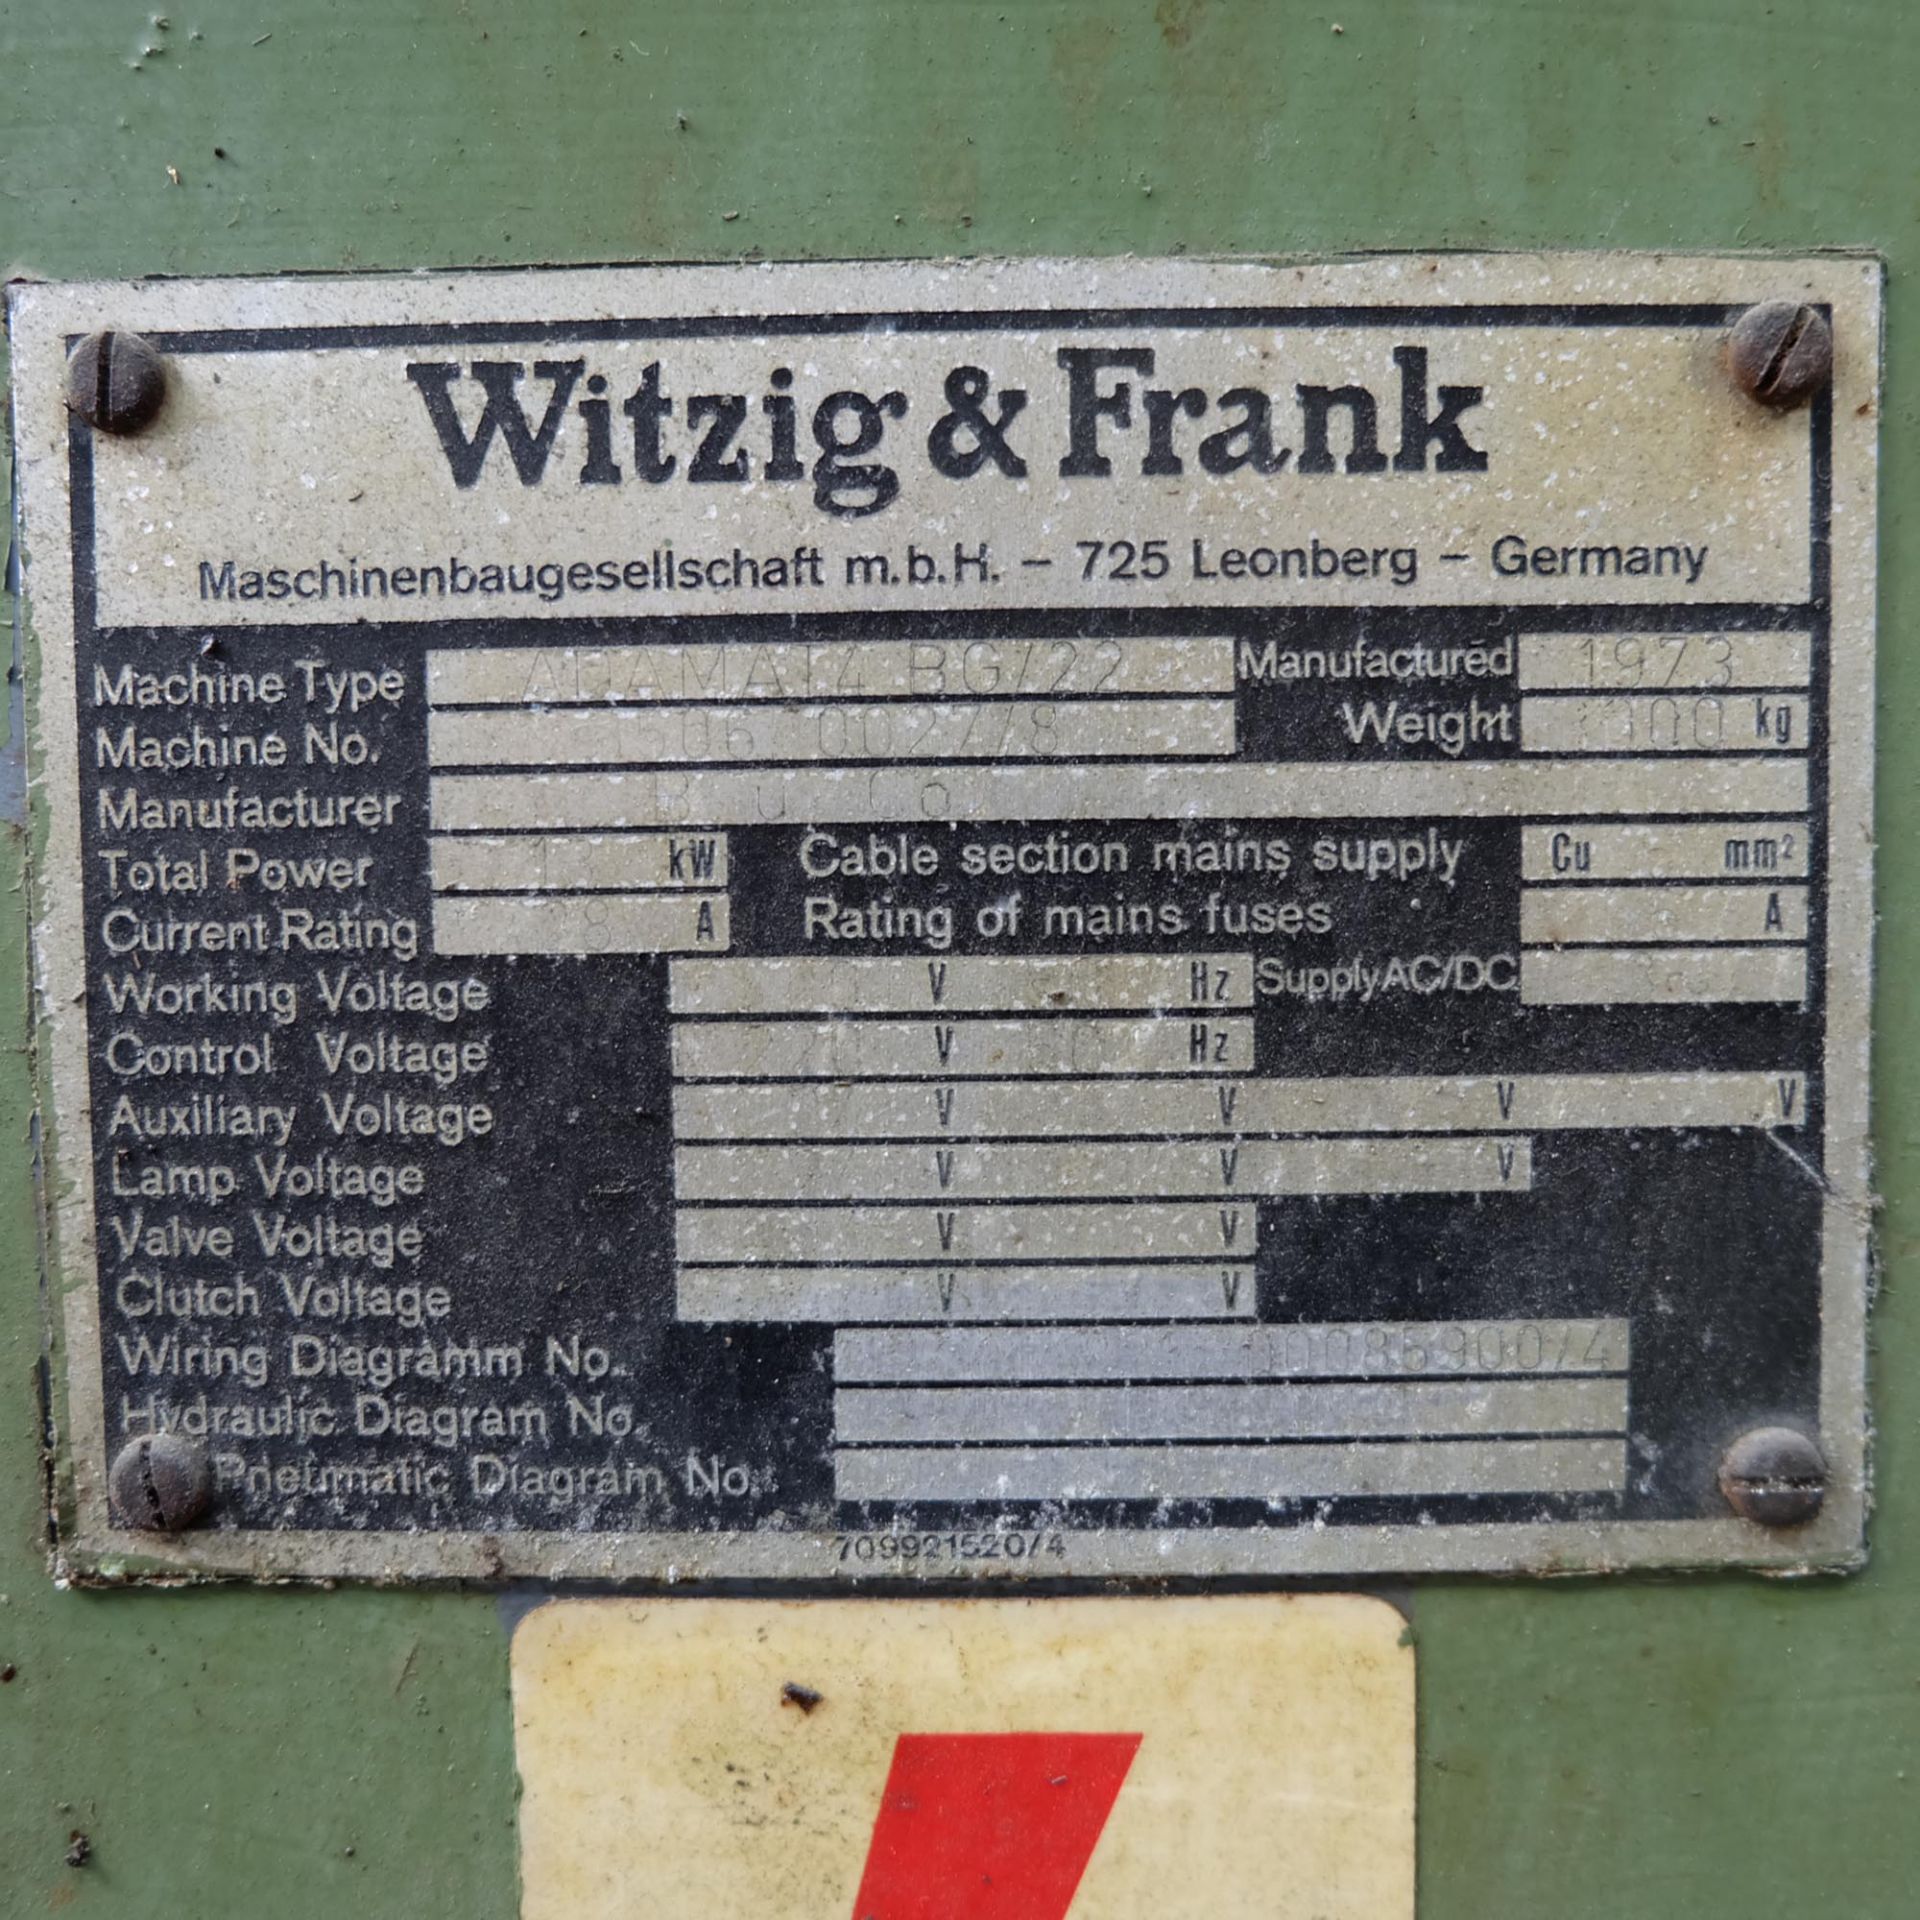 Witzig & Frank Model Adamat 4 BG/22. Six Station Indexing Rotary Transfer Machine. - Image 10 of 11